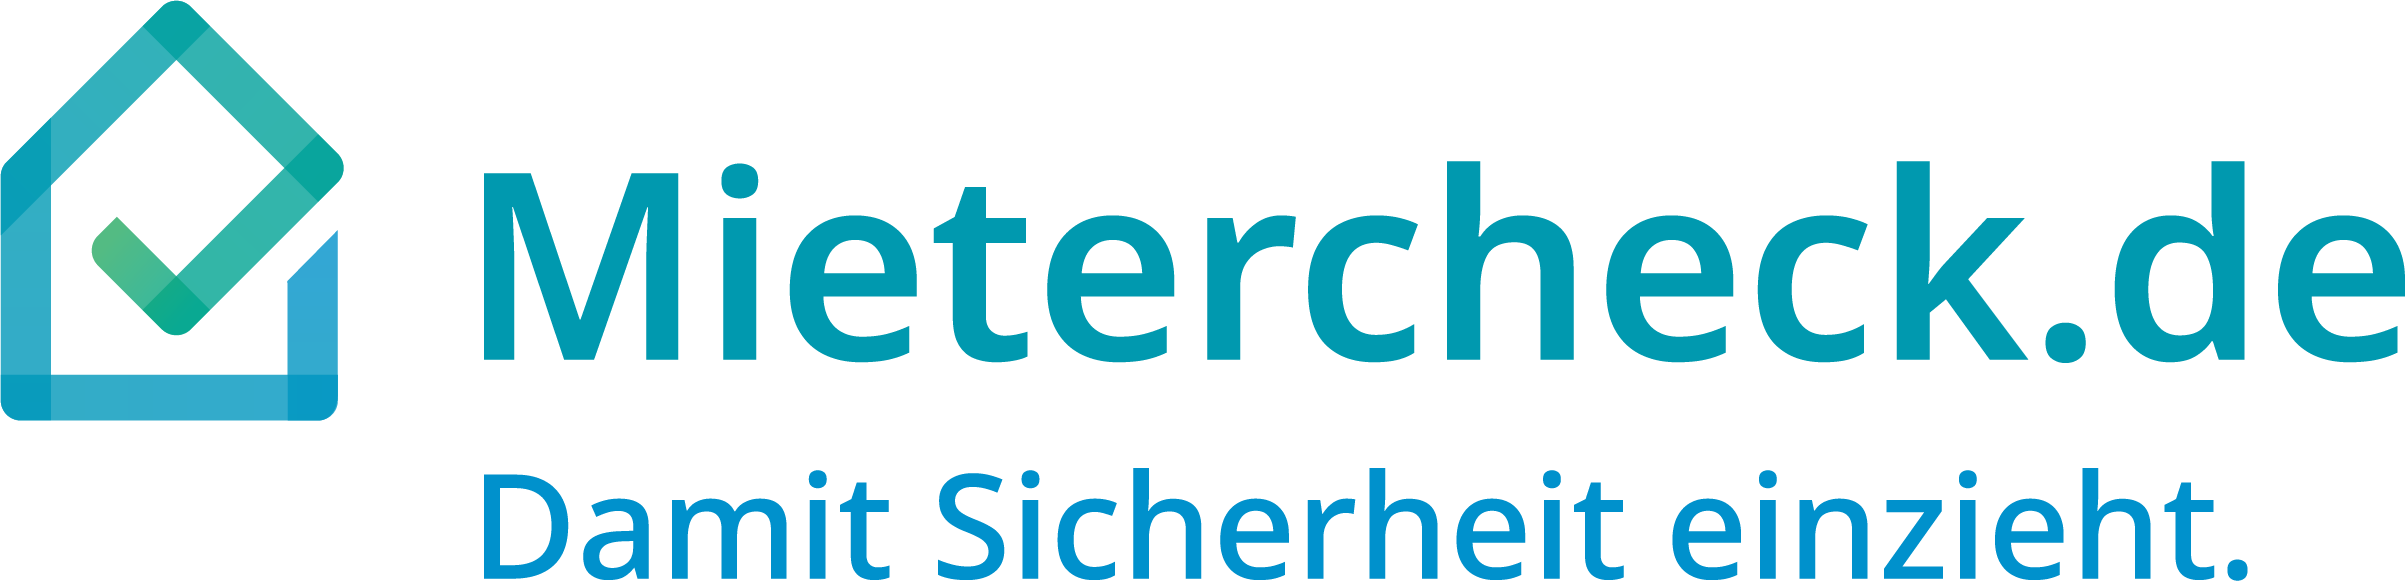 Mietercheck GmbH